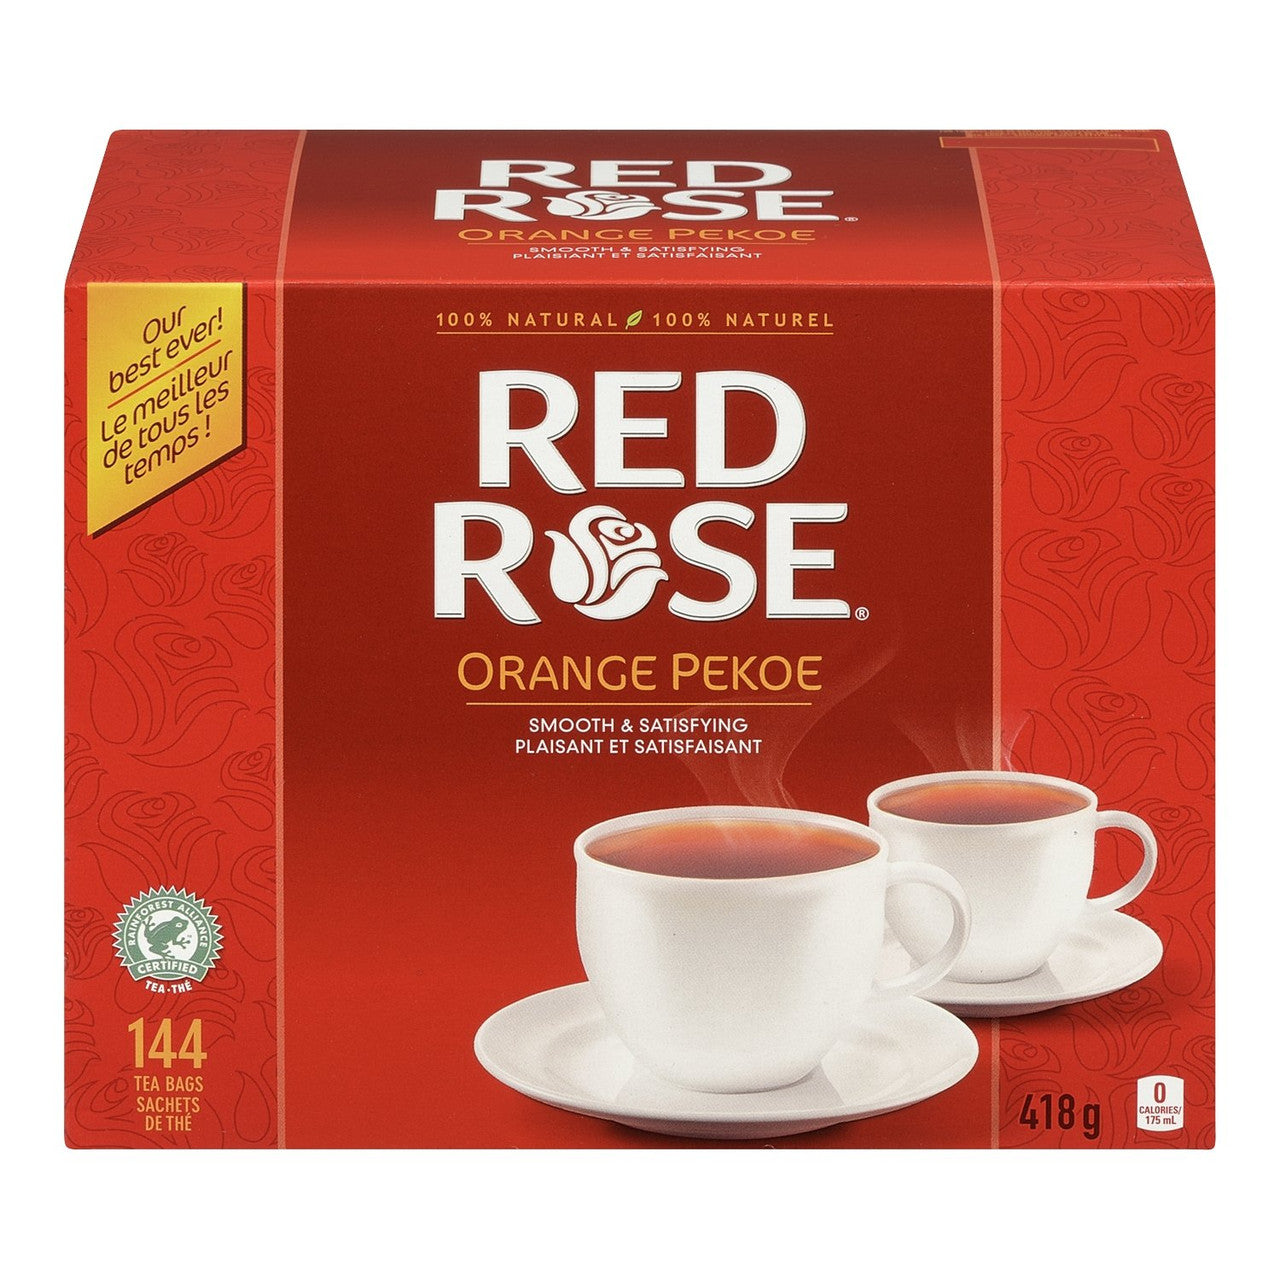 Red Rose Orange Pekoe Tea 418g Box/144 Tea Bags (Imported from Canada)